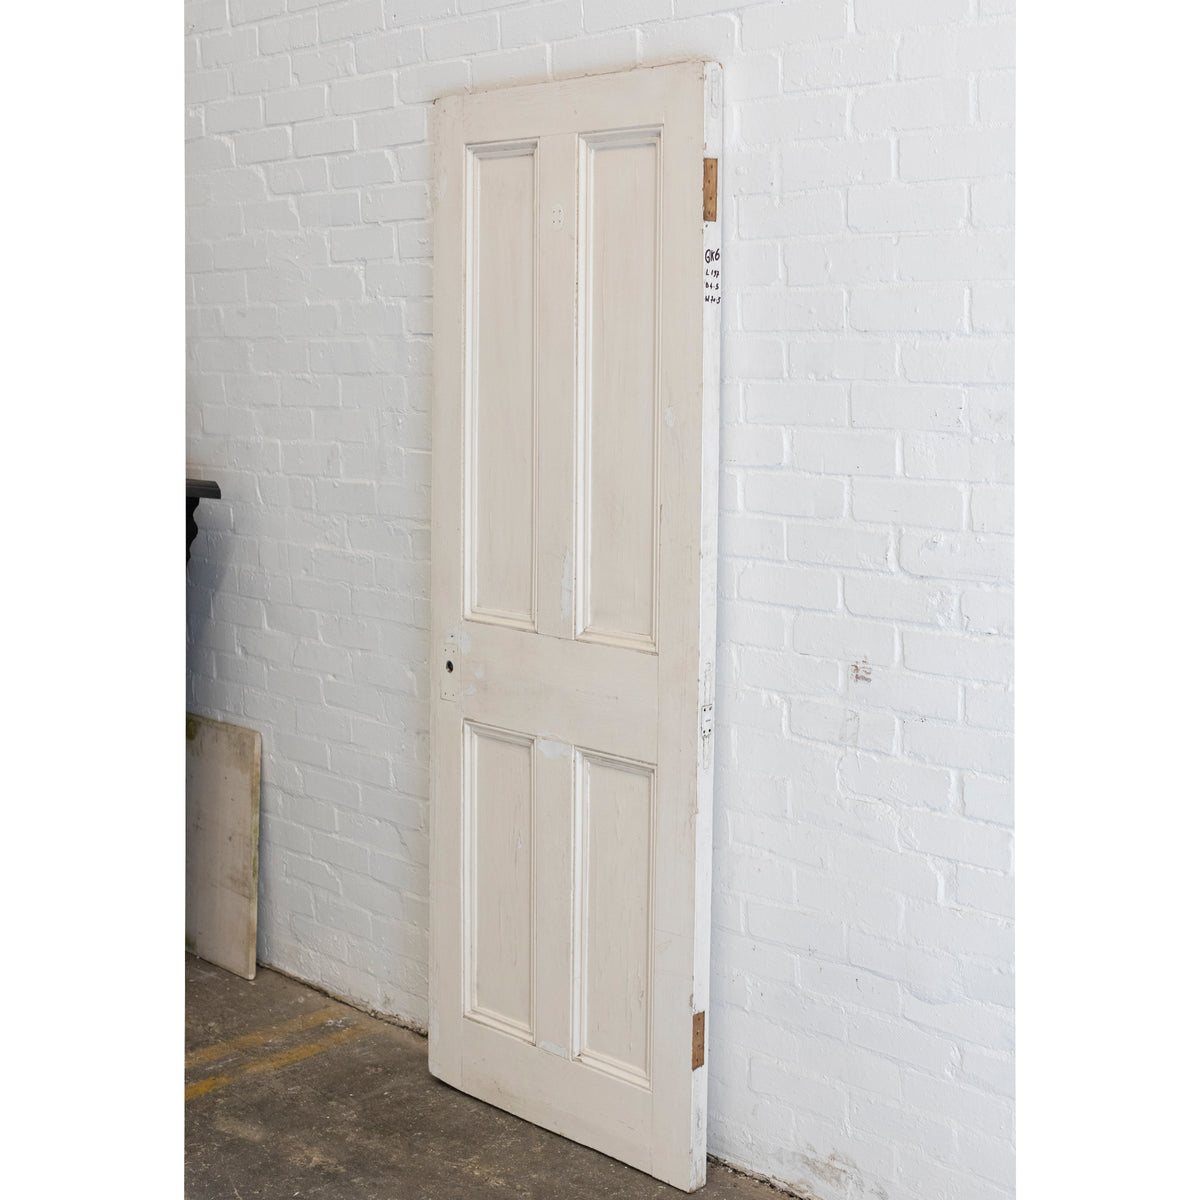 Antique Reclaimed Victorian 4 Panel Door - 197cm x 70.5cm | The Architectural Forum